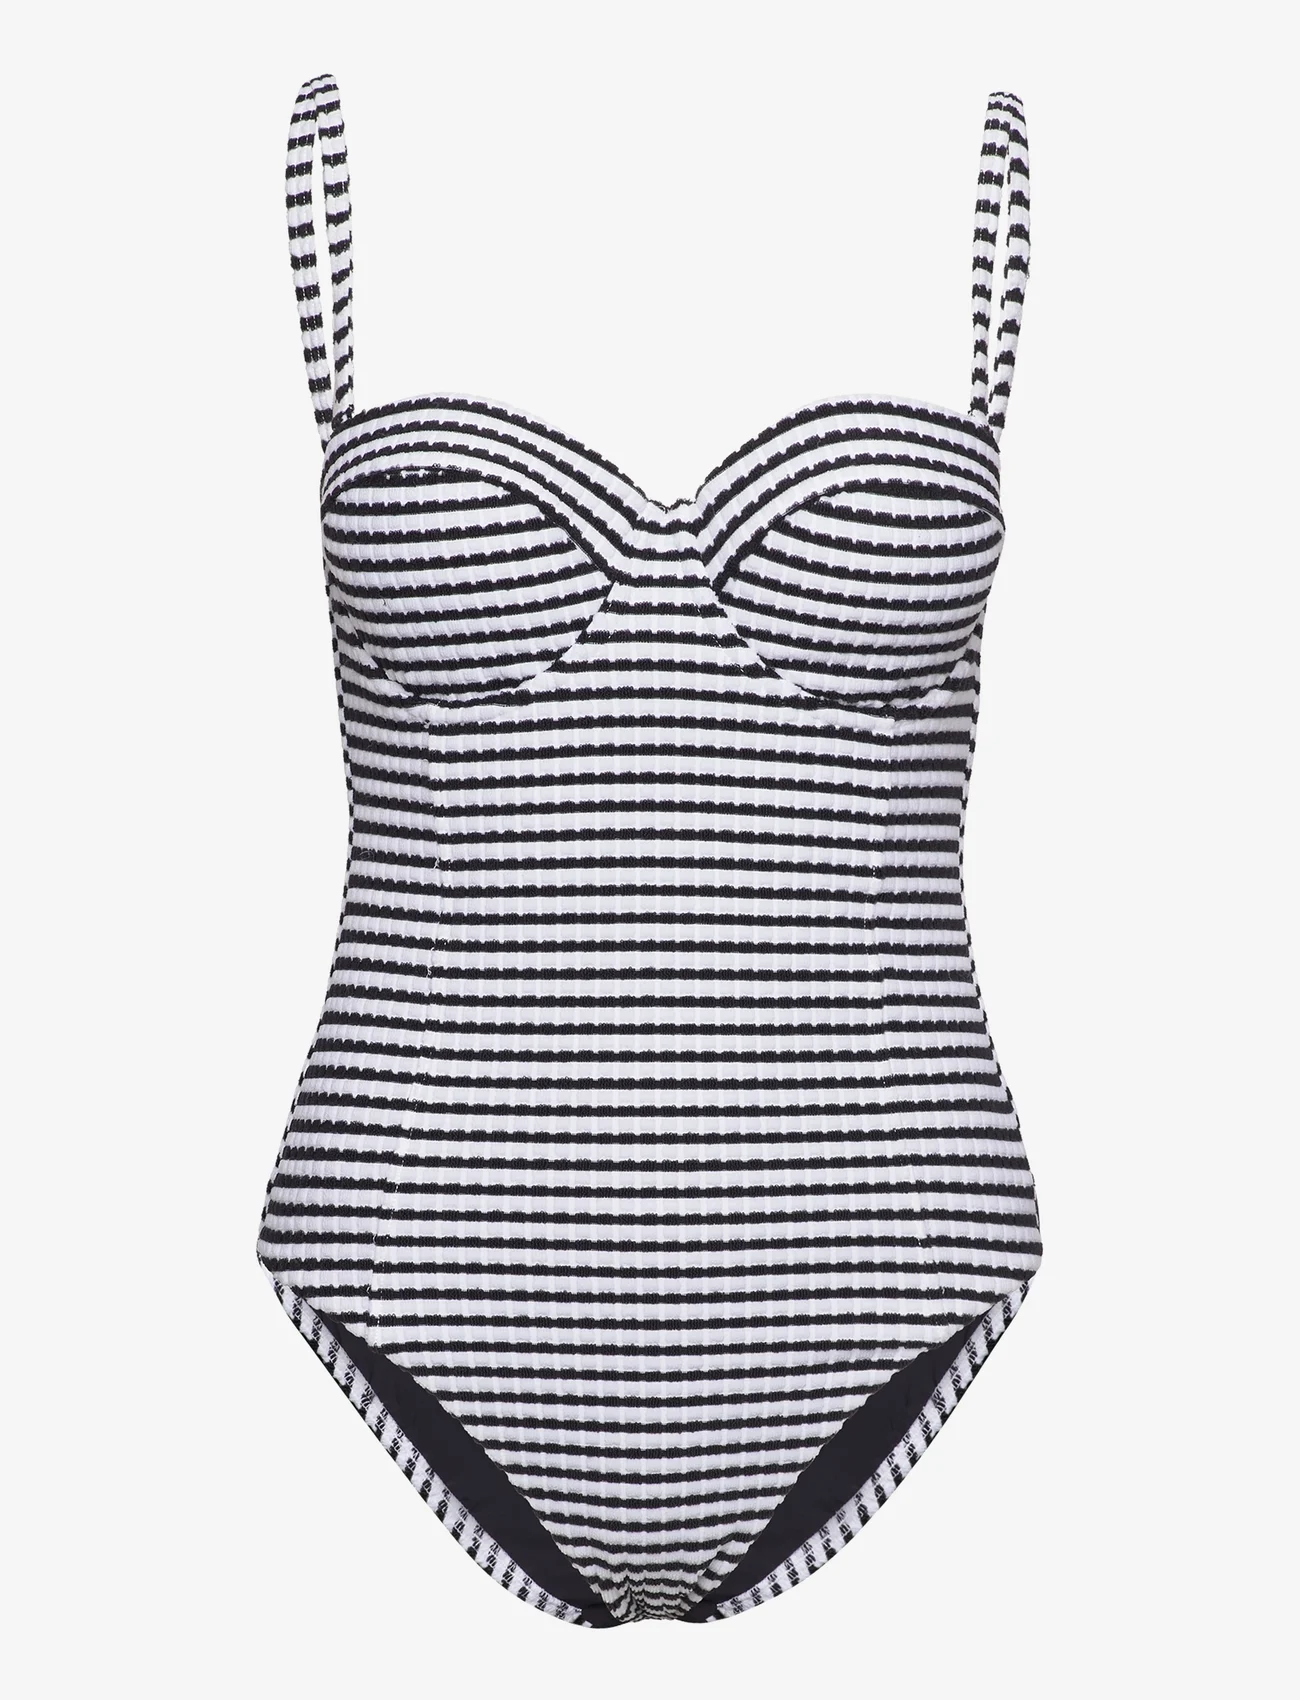 Seafolly - Sorrento Stripe Bustier Bra One piece - swimsuits - black - 0